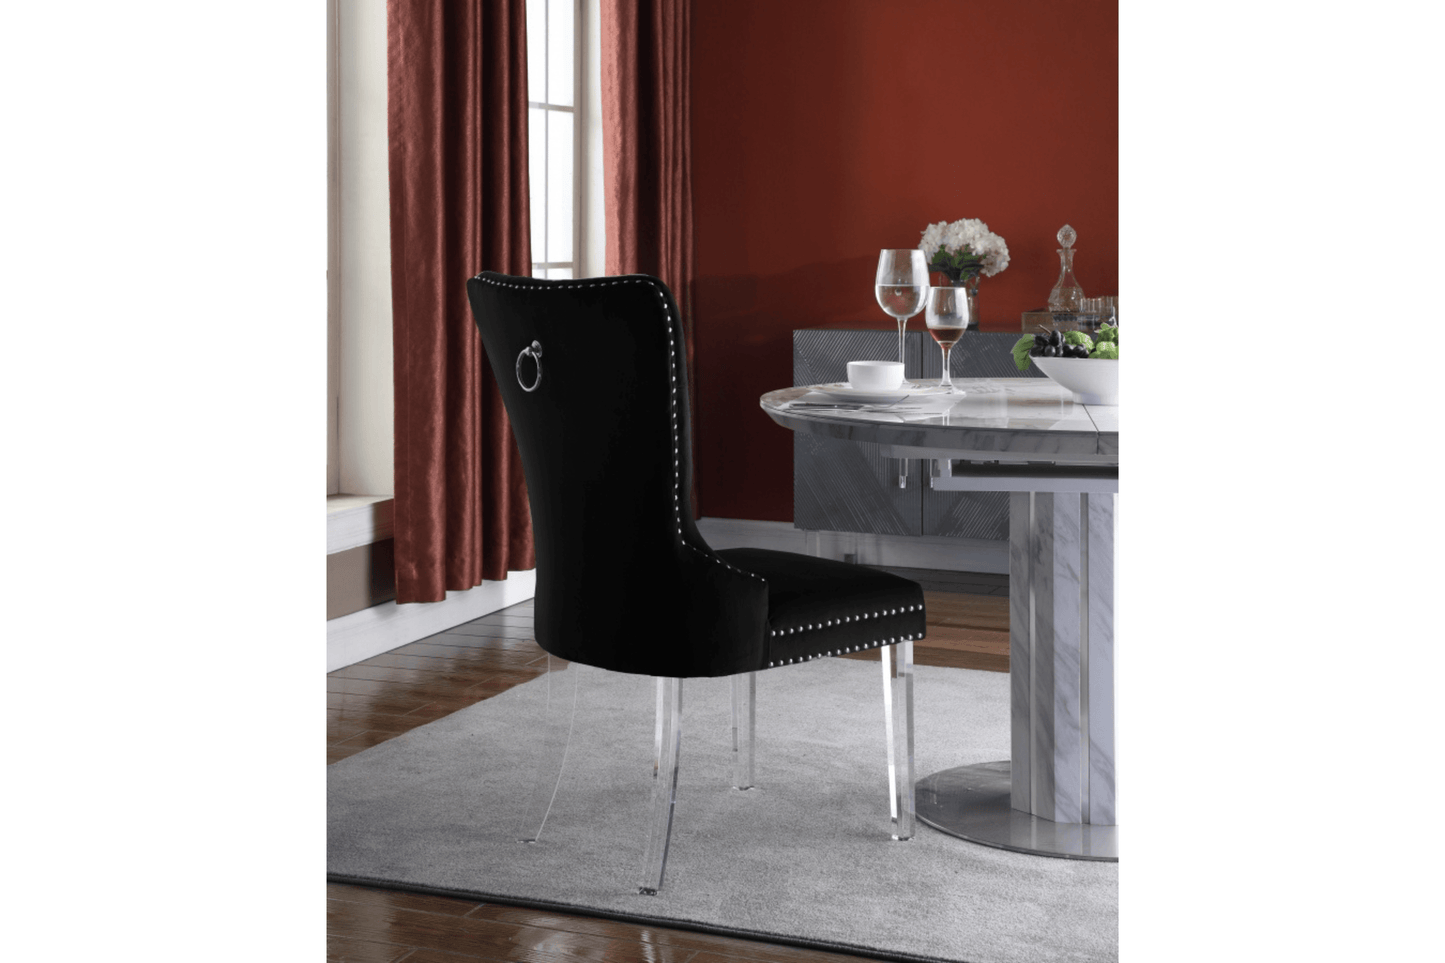 Miley Velvet Dining Chair with Acrylic Legs SKU: 746-C - Venini Furniture 